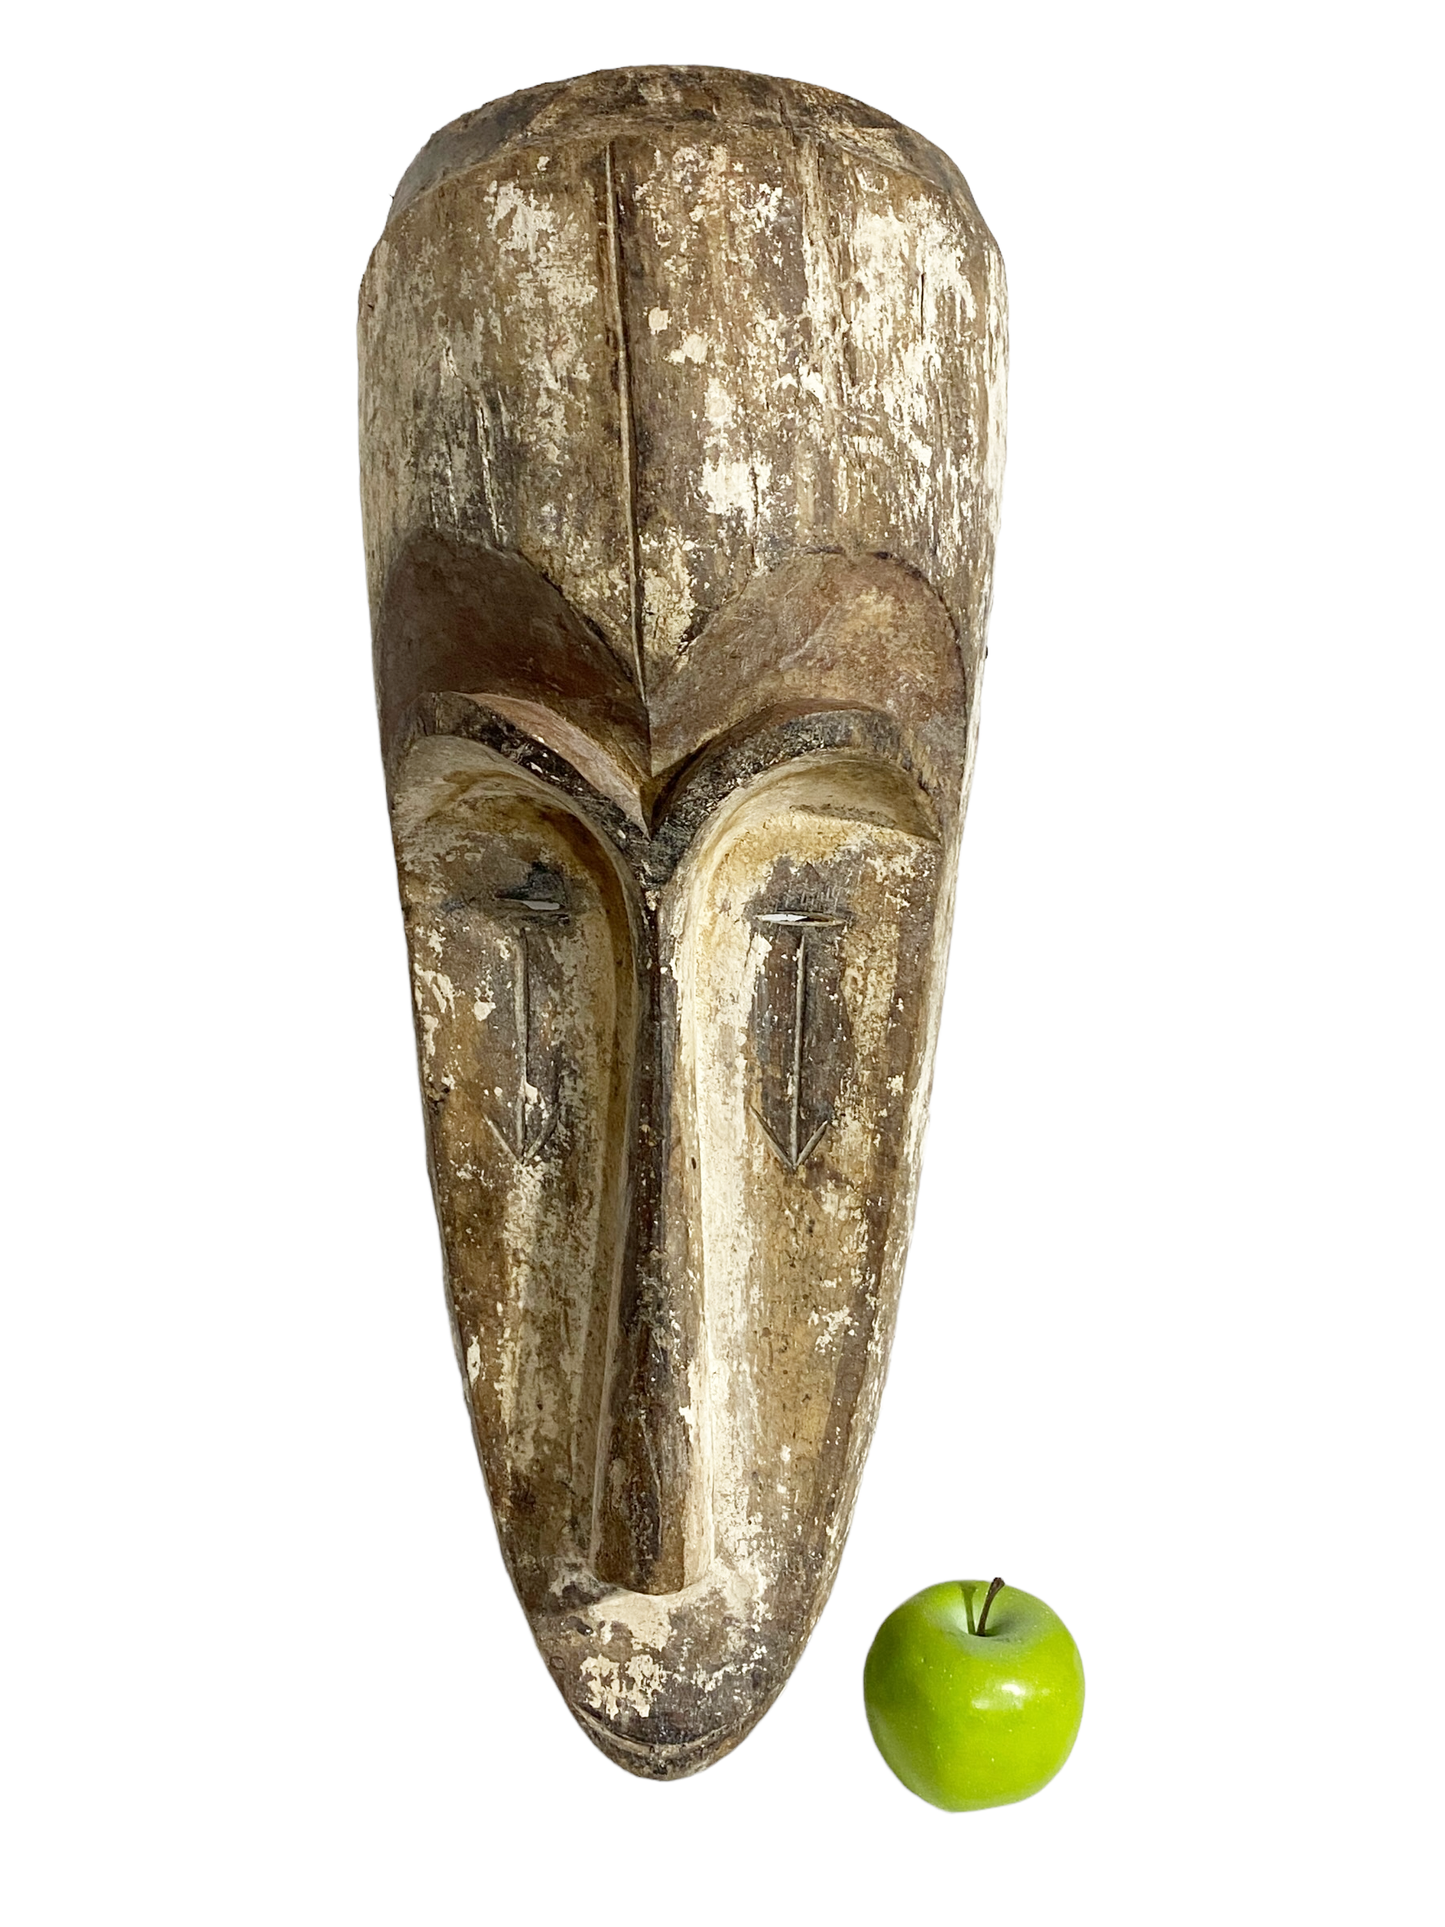 # 3575 Old Fang Mask Elongated Face Gabon African Mask 21.5" H